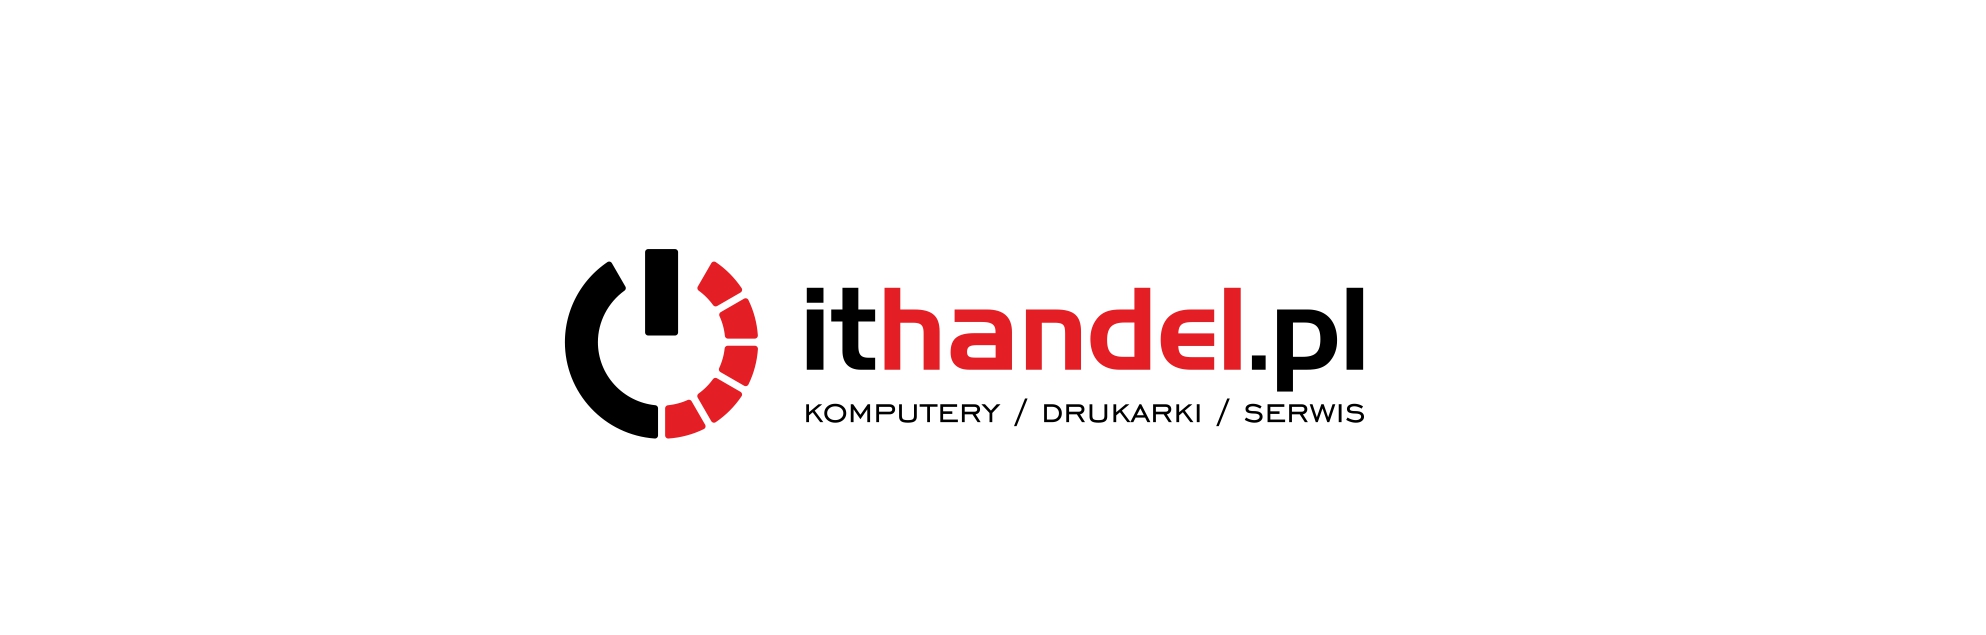 ITHANDEL.PL - Komputery / Drukarki / Serwis